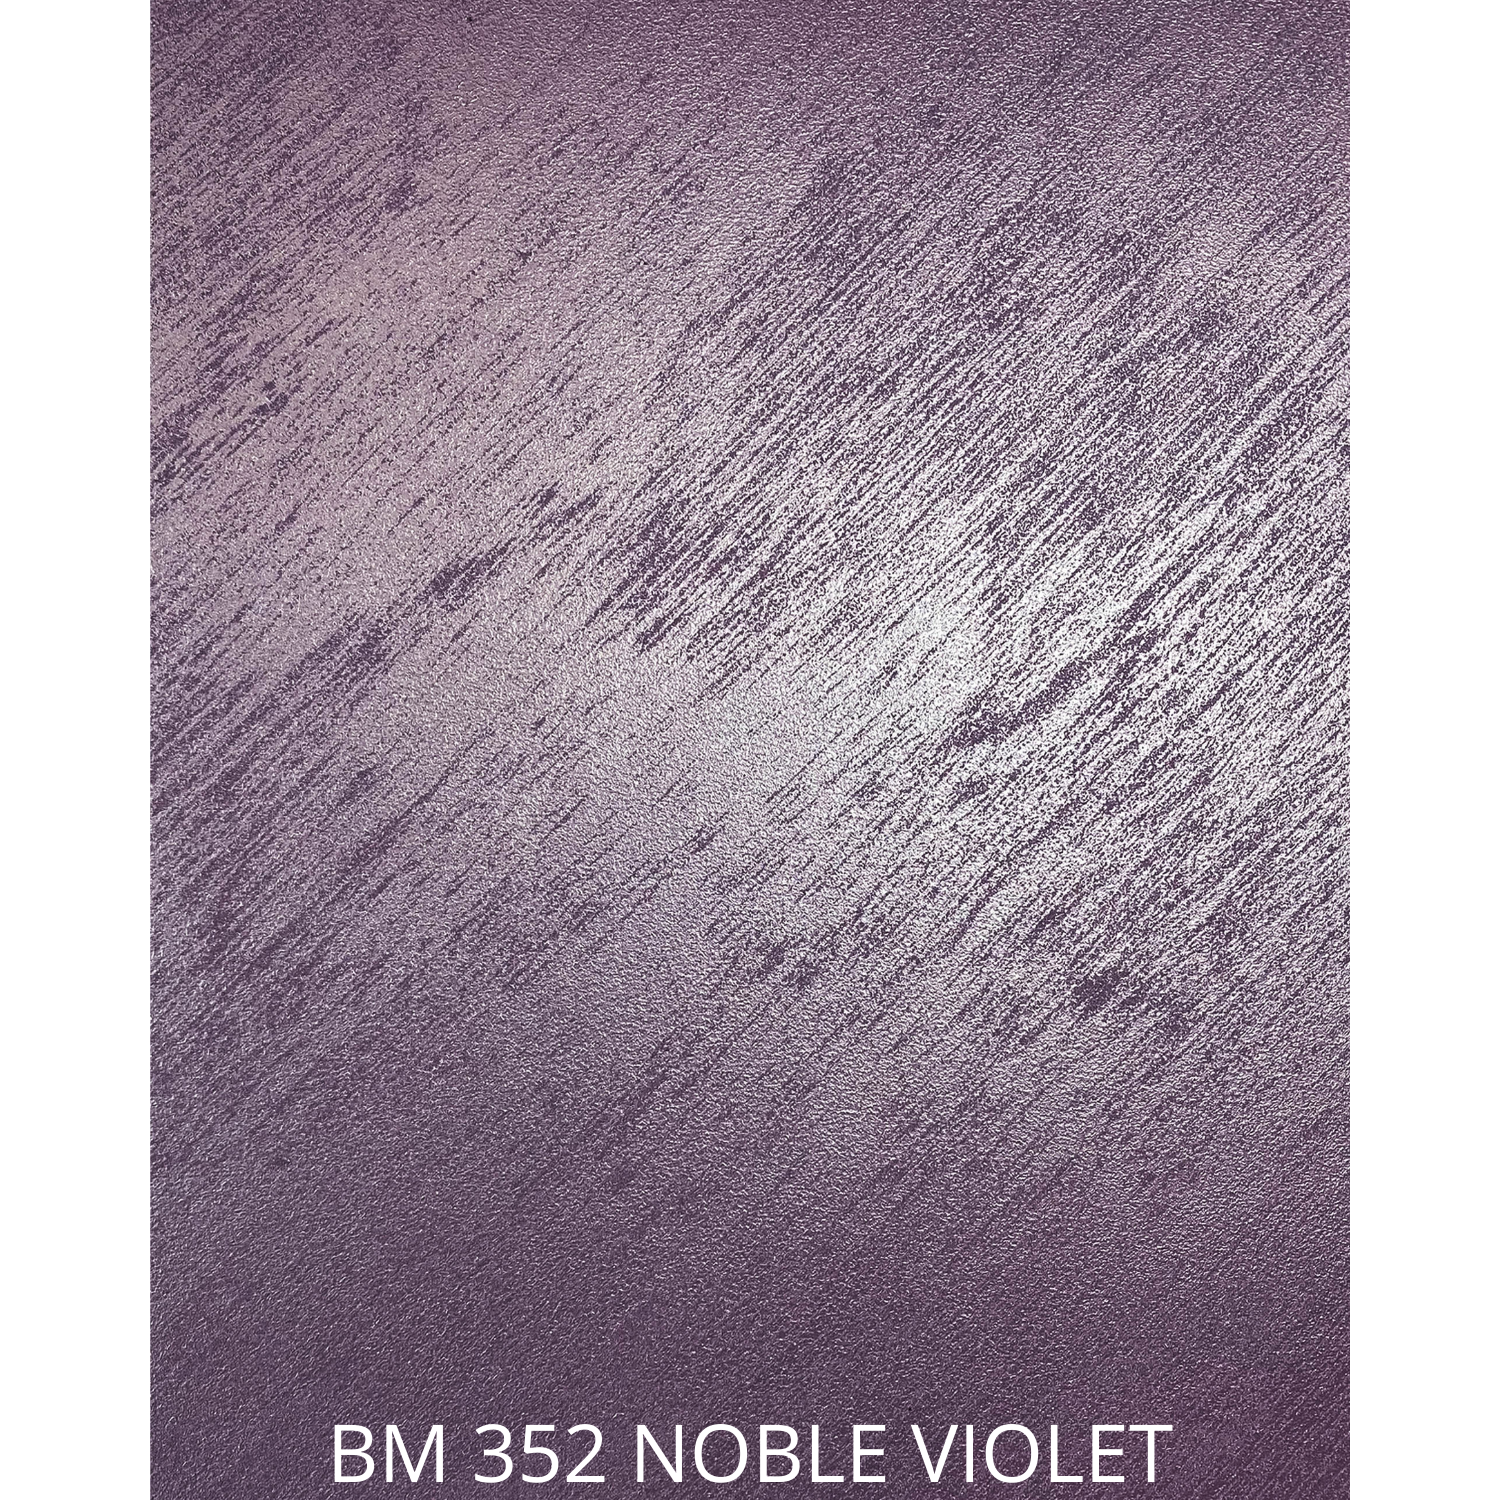 BM 352 NOBLE VIOLET